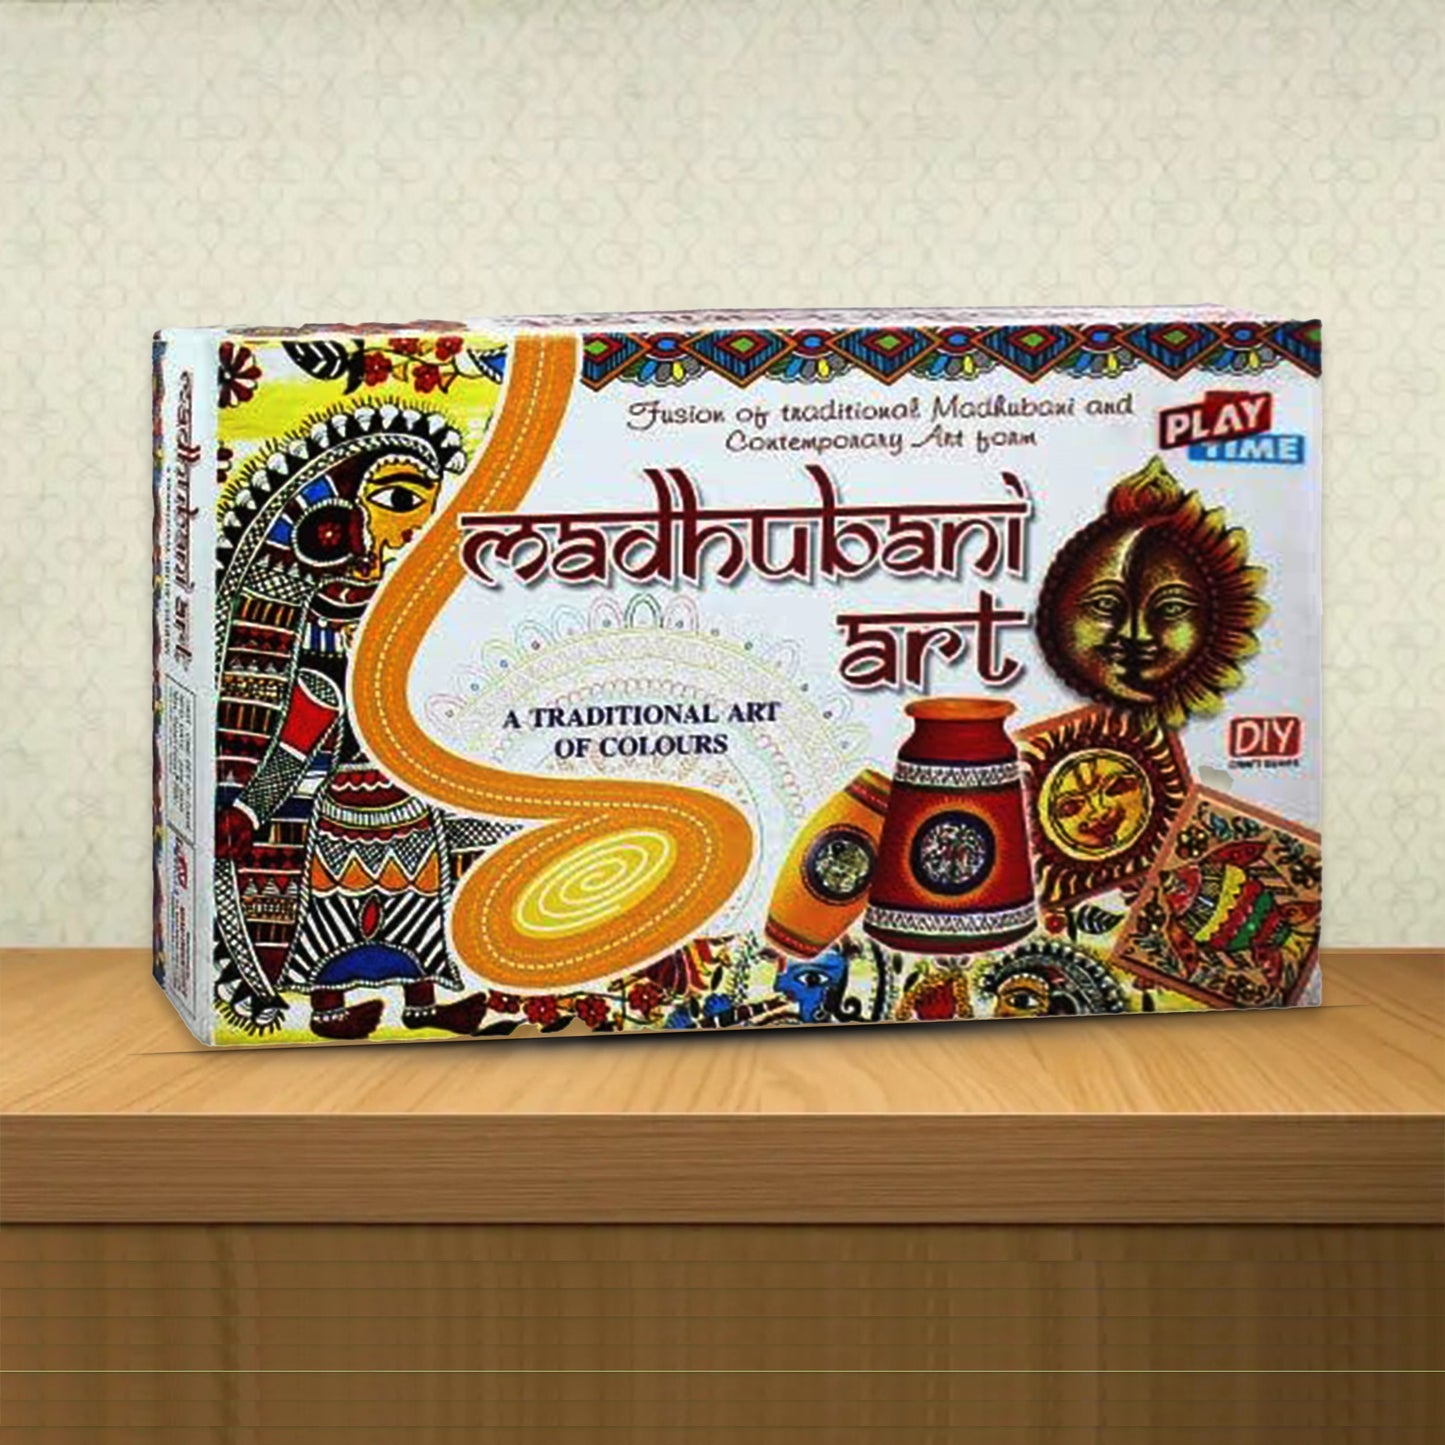 Madhubani Art Game for Kids, Craft Kits, Do it Yourself